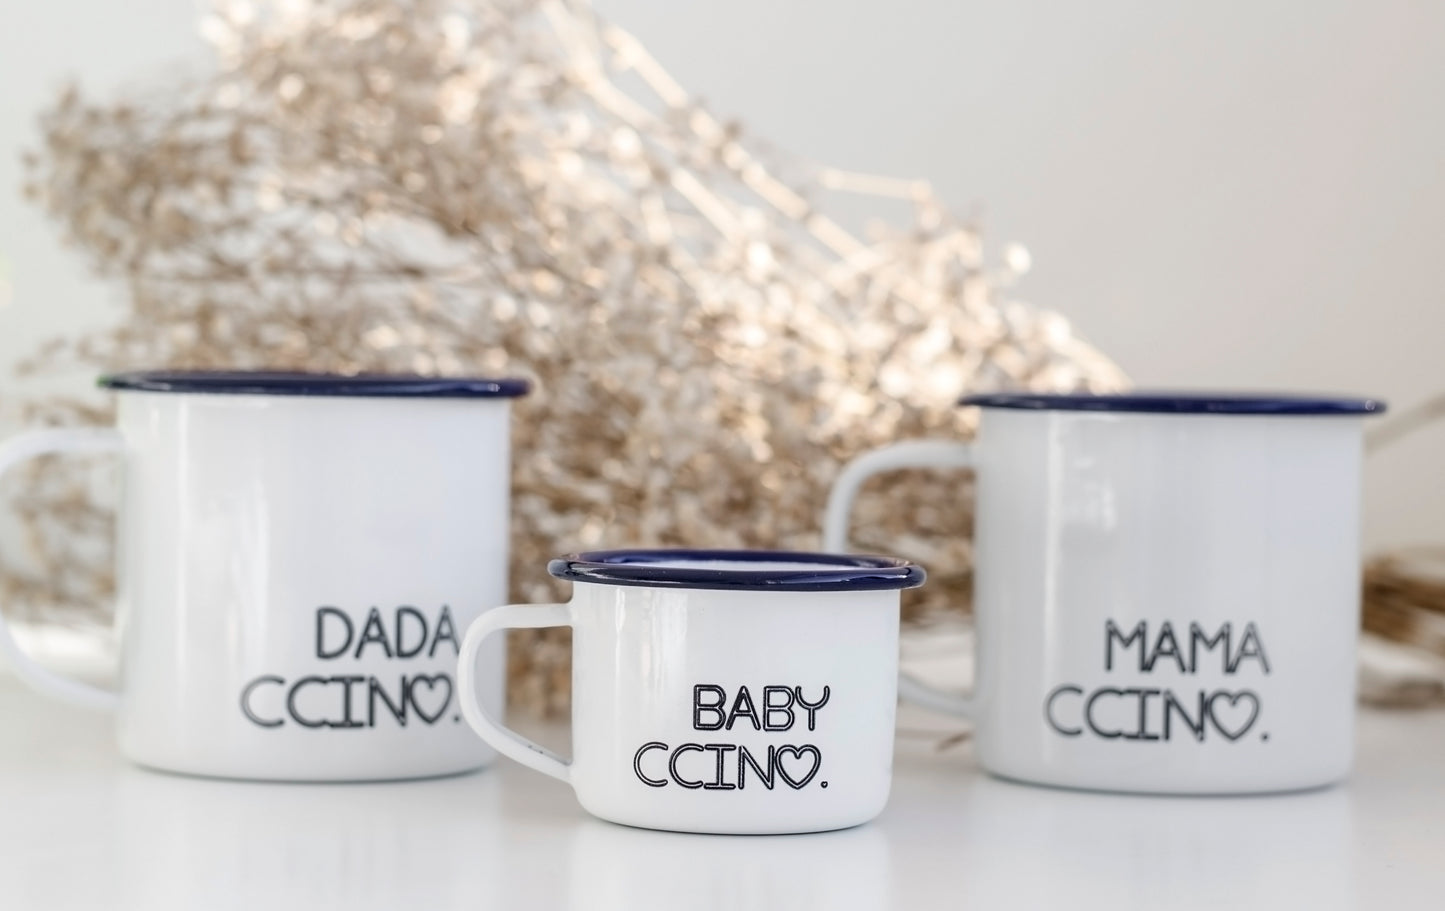 Babyccino - My Ccino Engraved Enamel Mug - One Mama One Shed